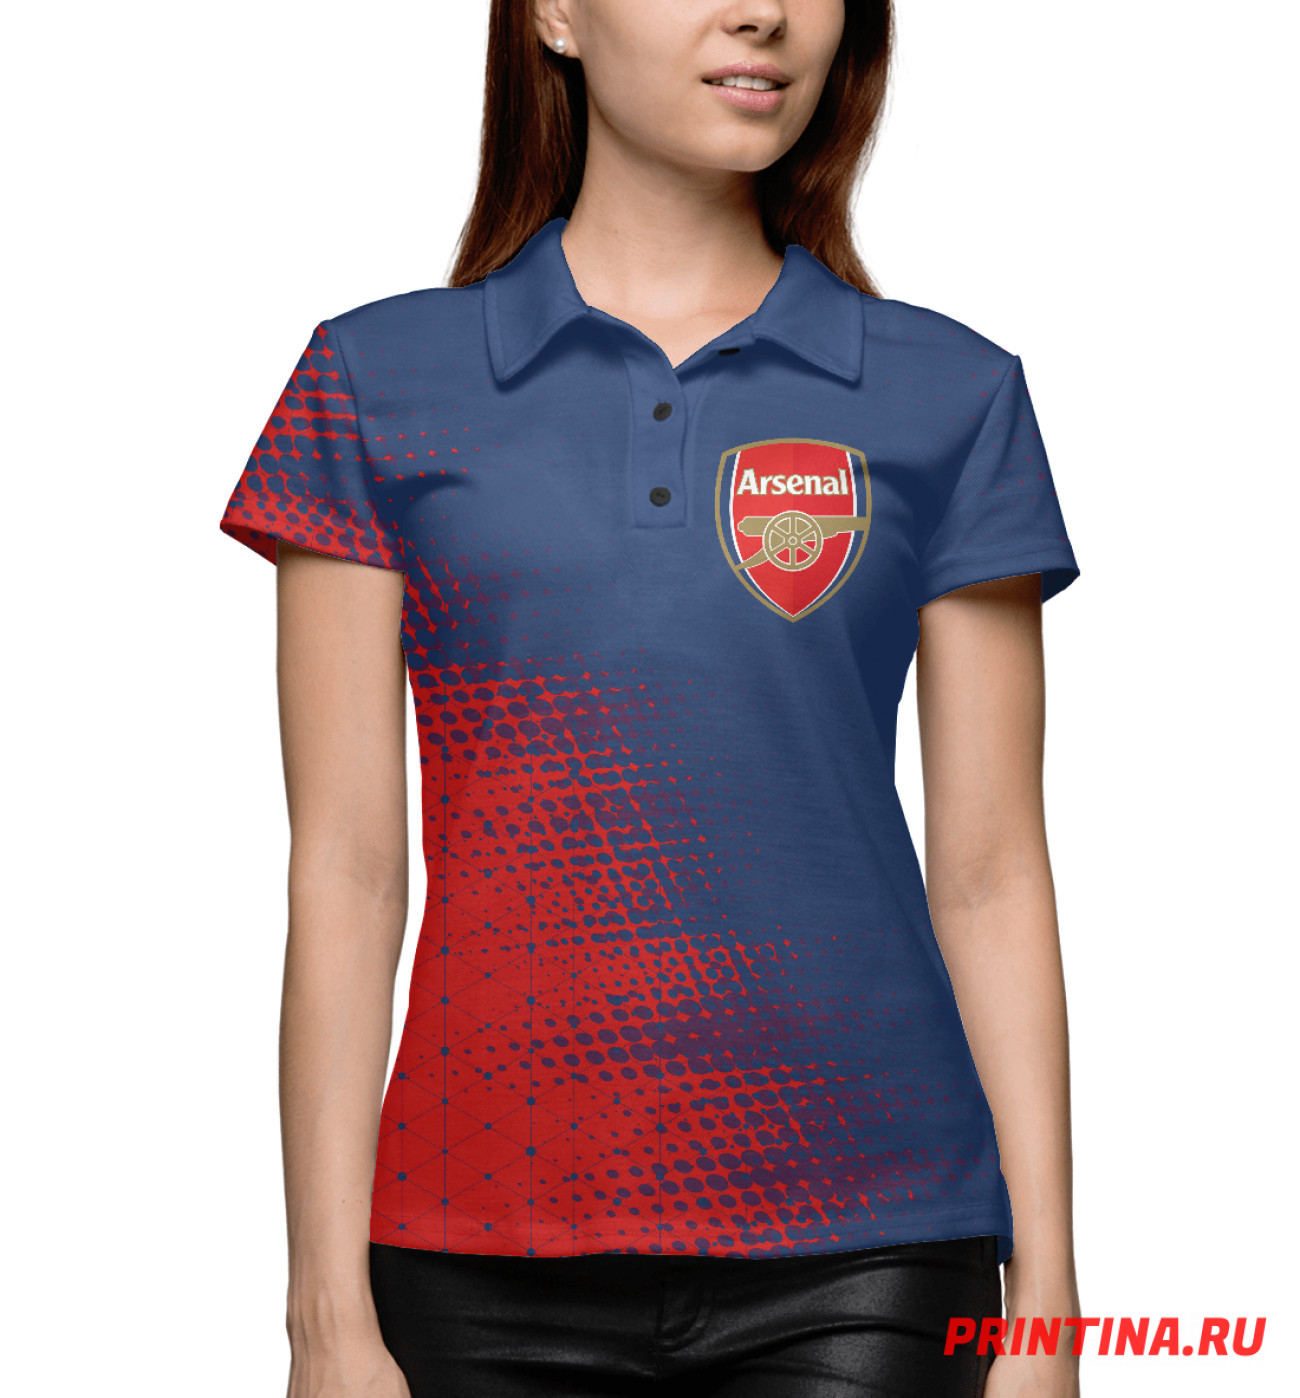 Женское Поло Arsenal / Арсенал, артикул: ARS-773883-pol-1